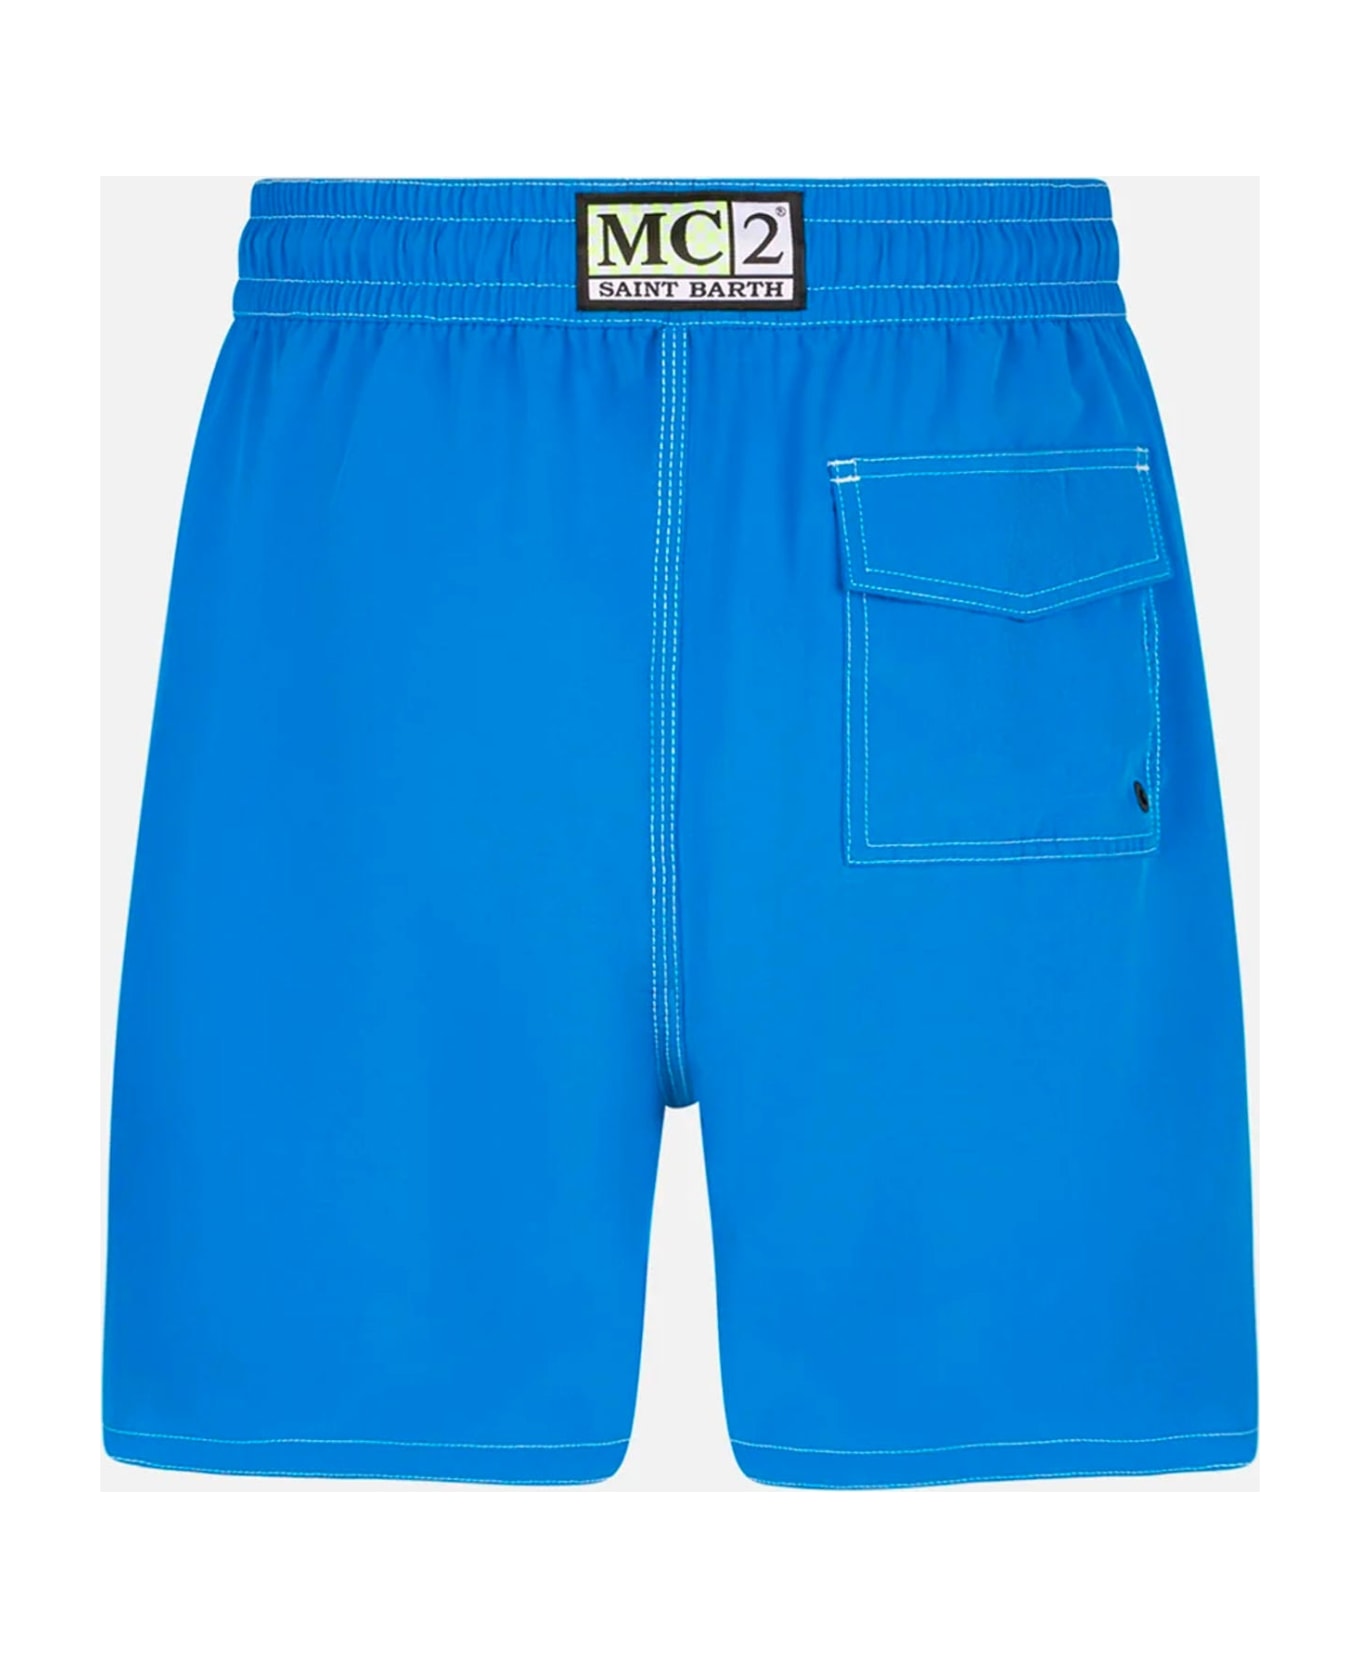 MC2 Saint Barth Man Comfort And Stretch Bluette Surf Swim Shorts - SKY